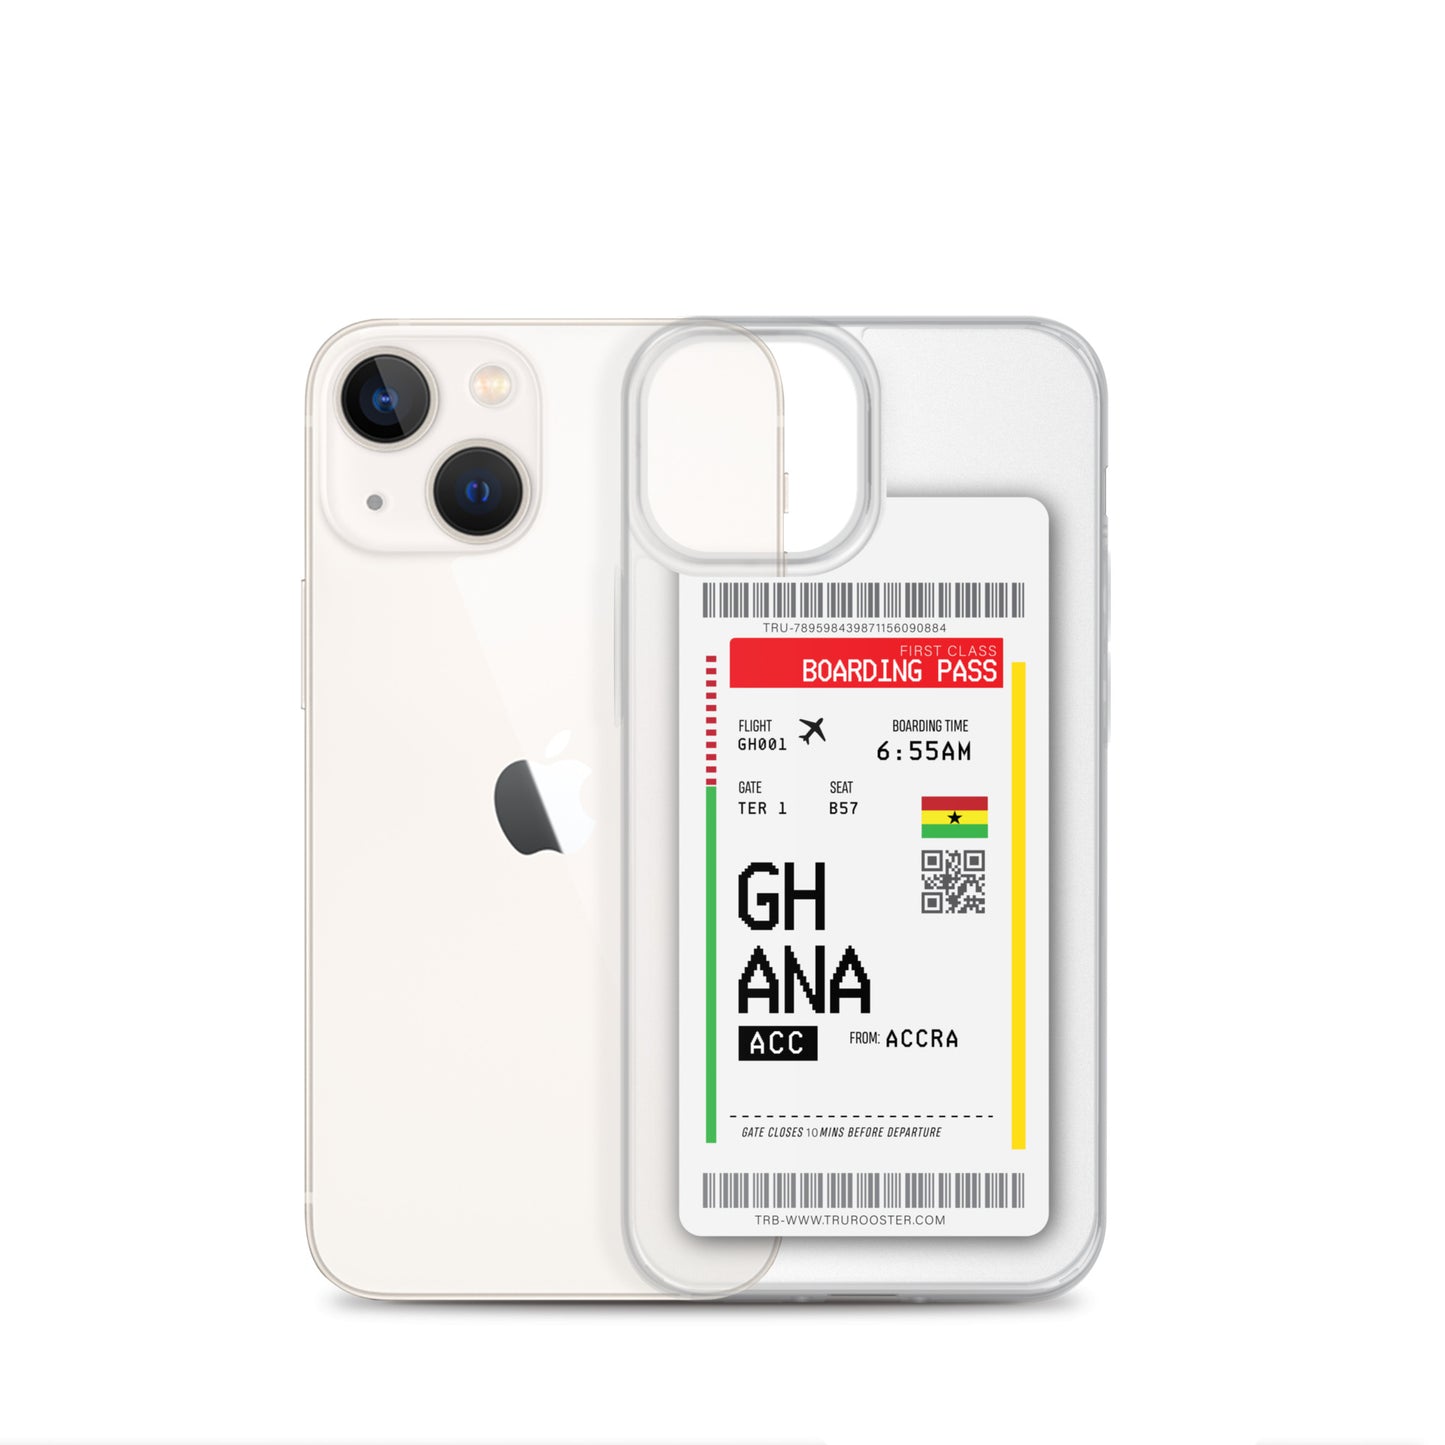 Ghana Transit Boarding pass iPhone Case